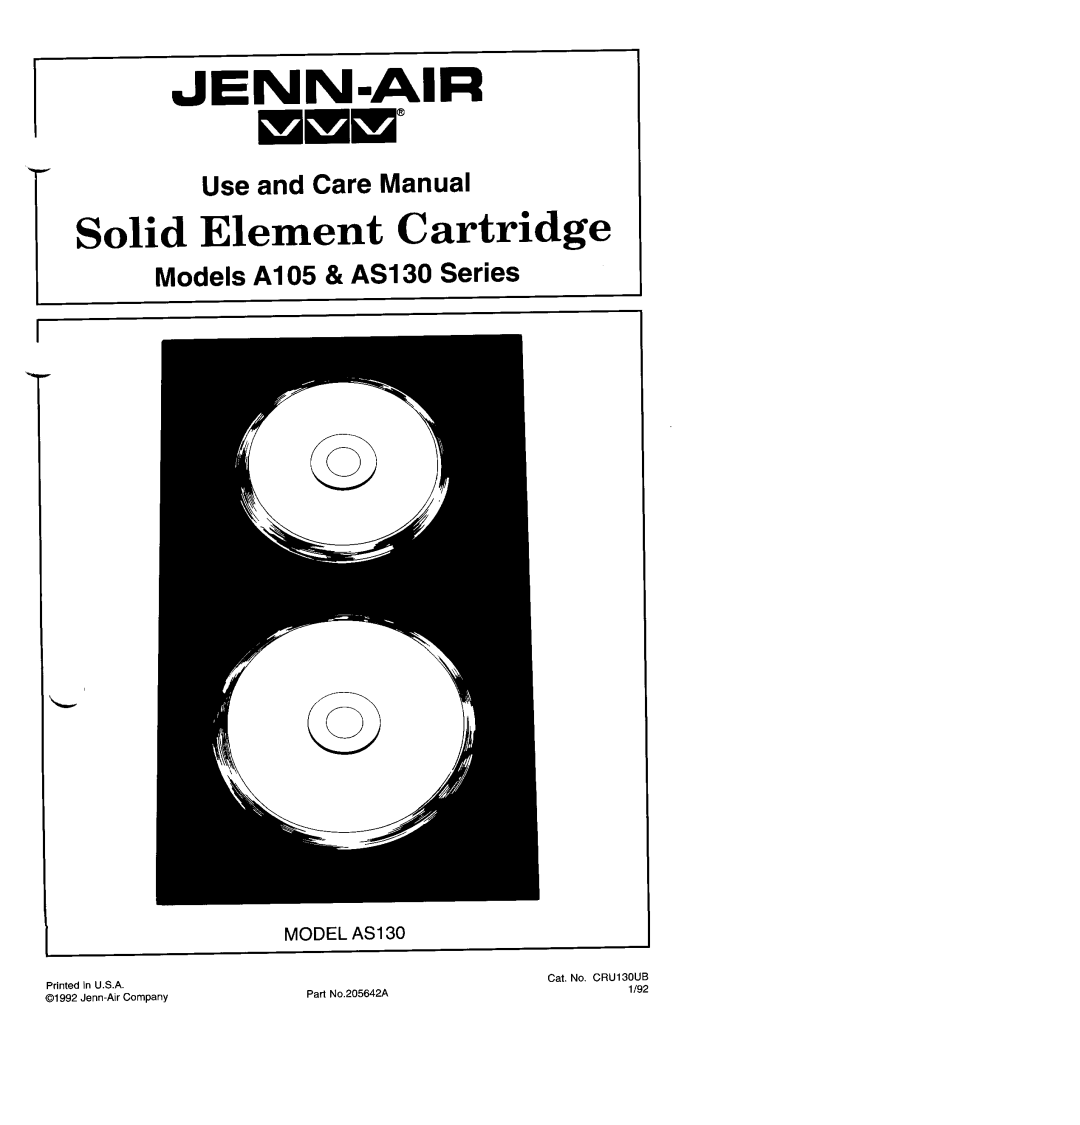 Jenn-Air manual Jenn-Air, Solid Element Cartridge, Use and Care Manual, Models A105 & AS130 Series, Printed, fn U.S.A 